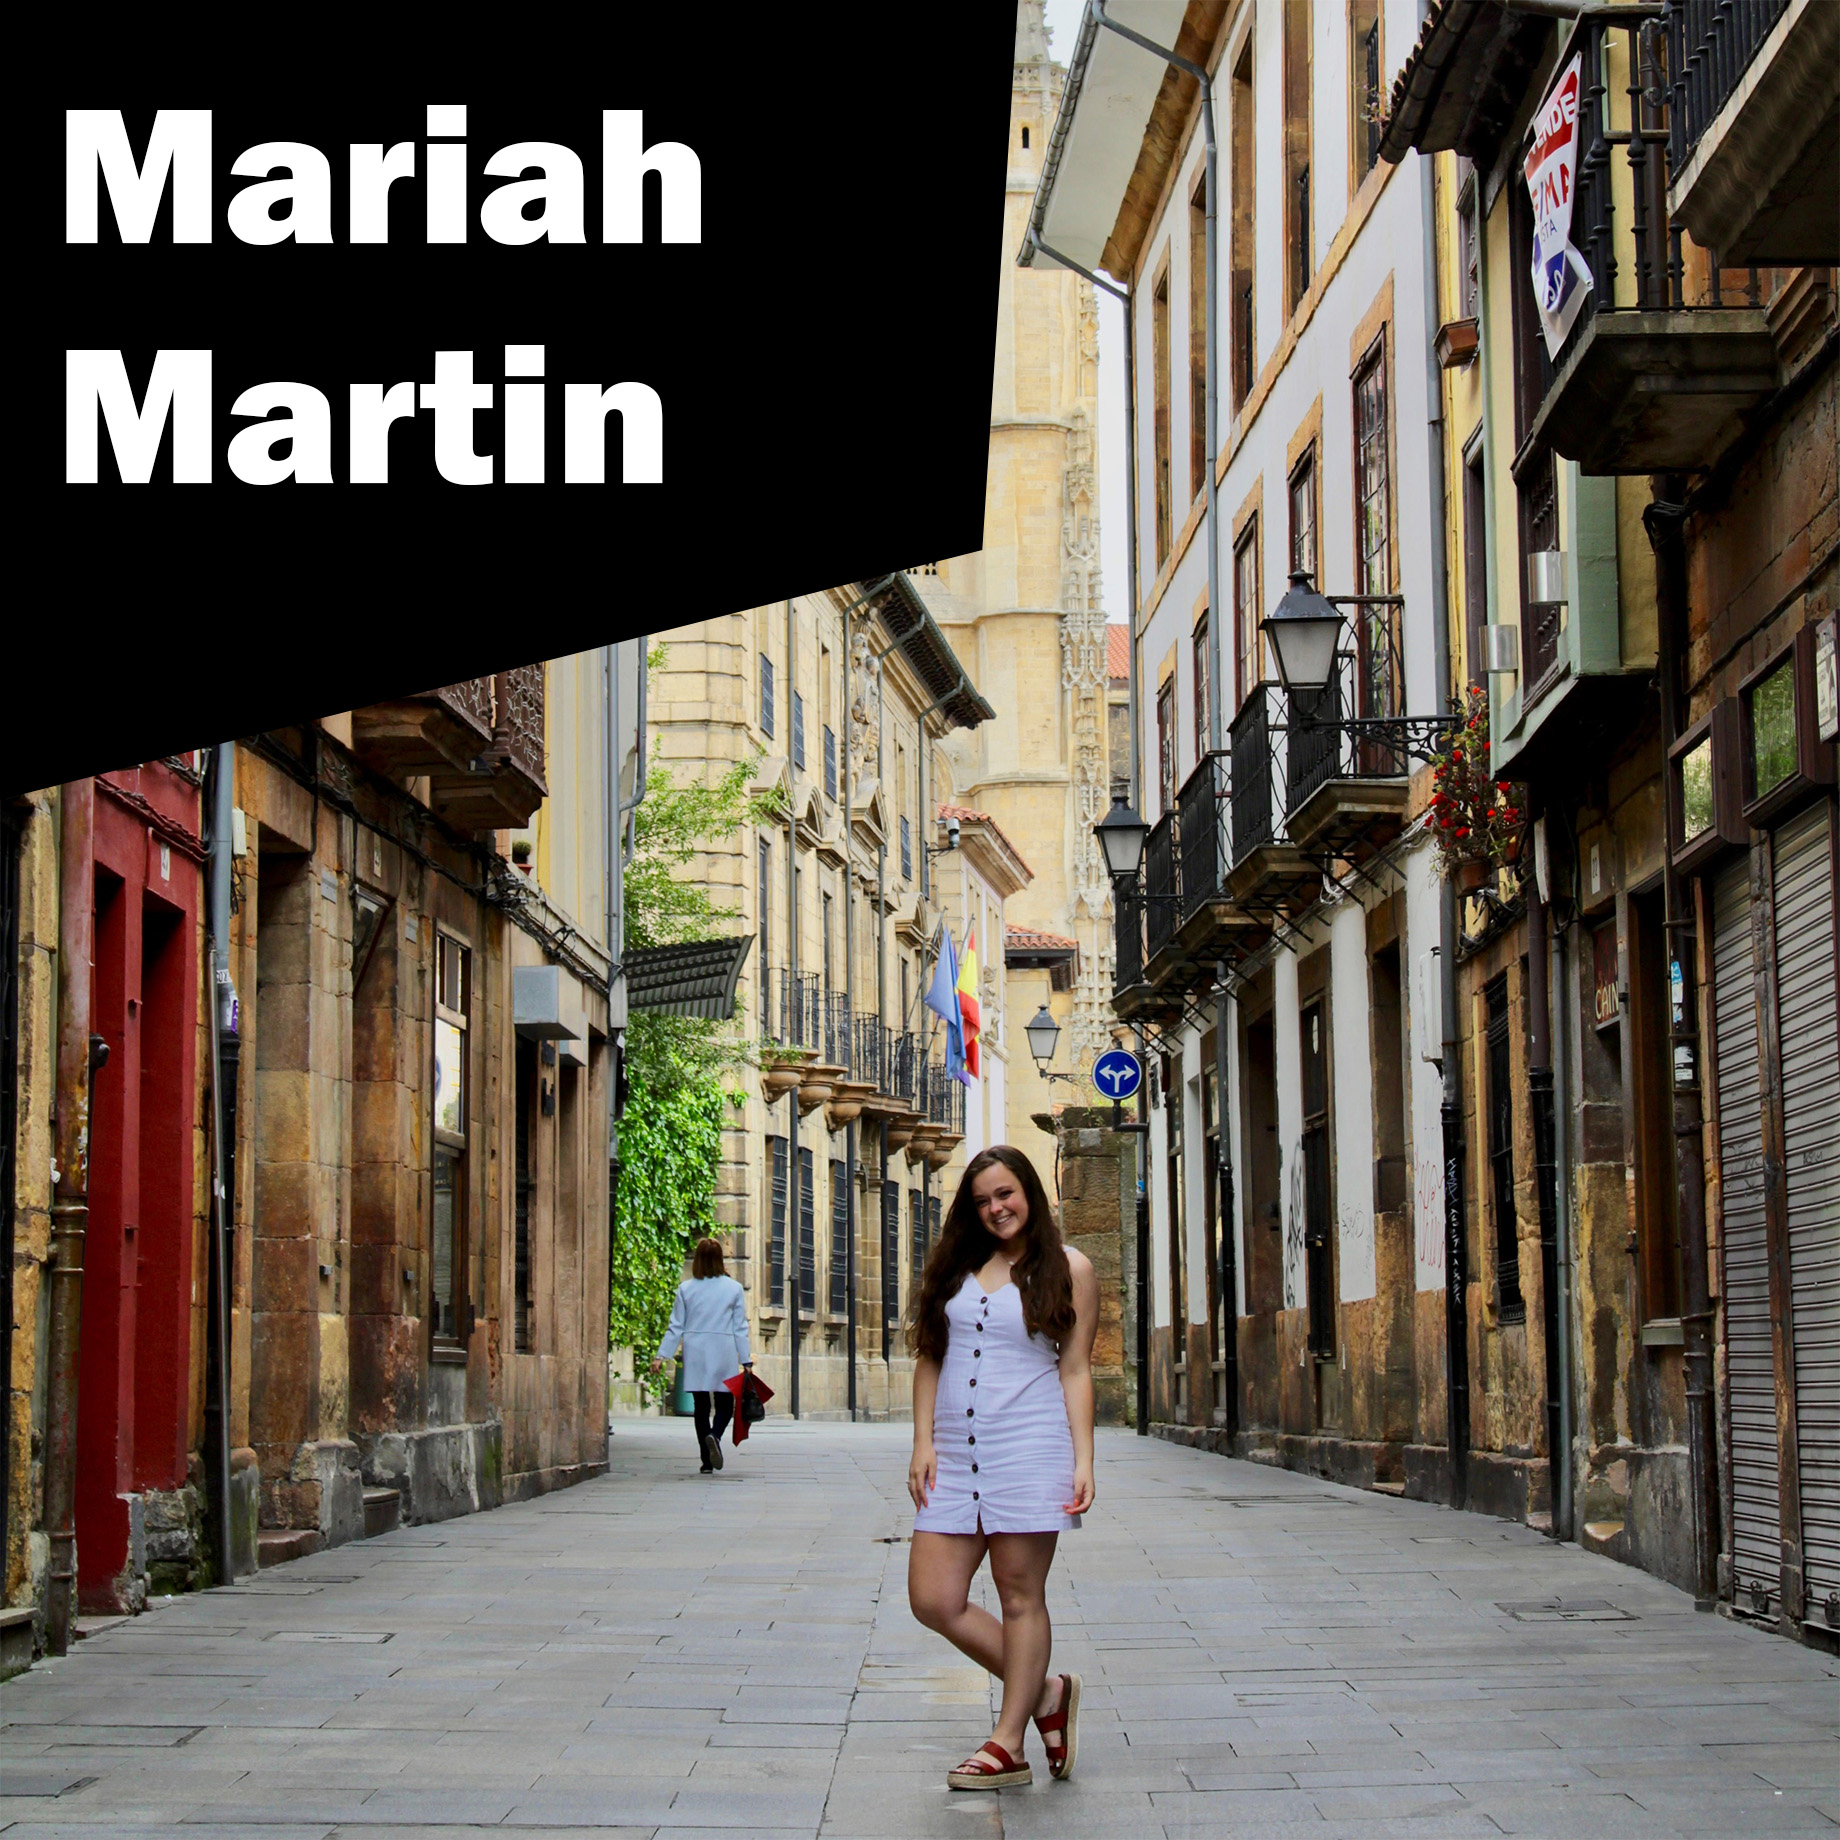 Mariah Martin